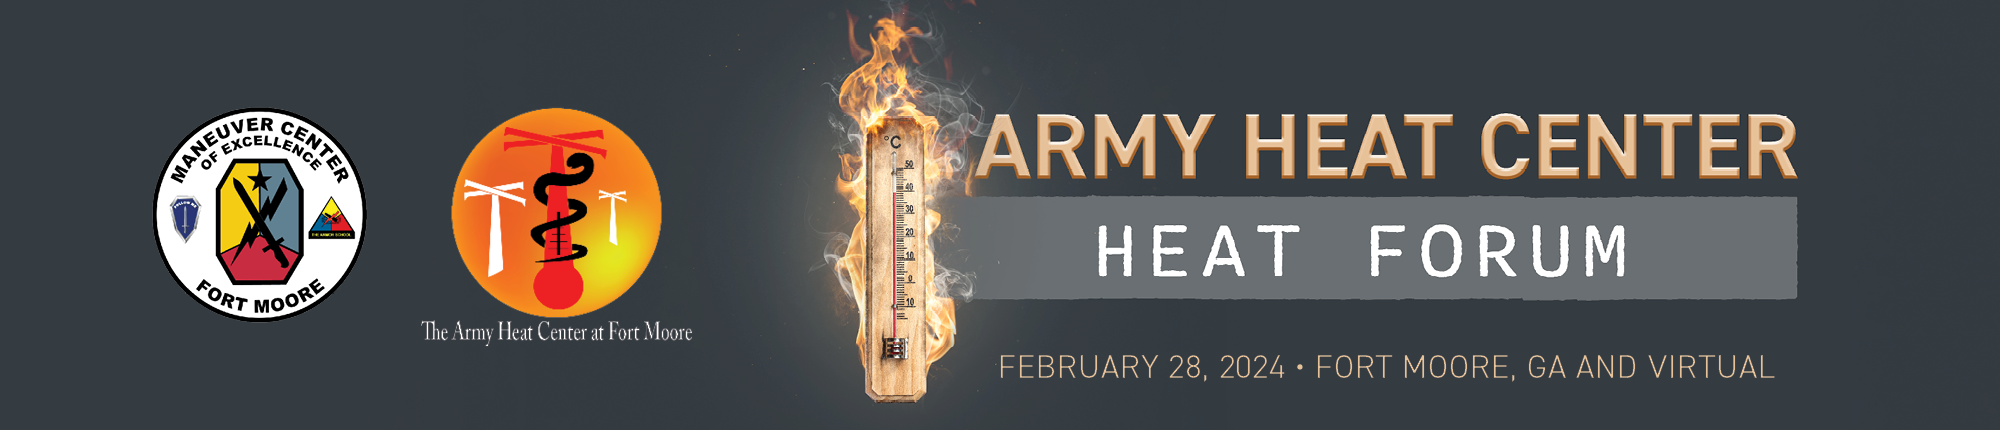 U.S. Army Heat Center Heat Forum